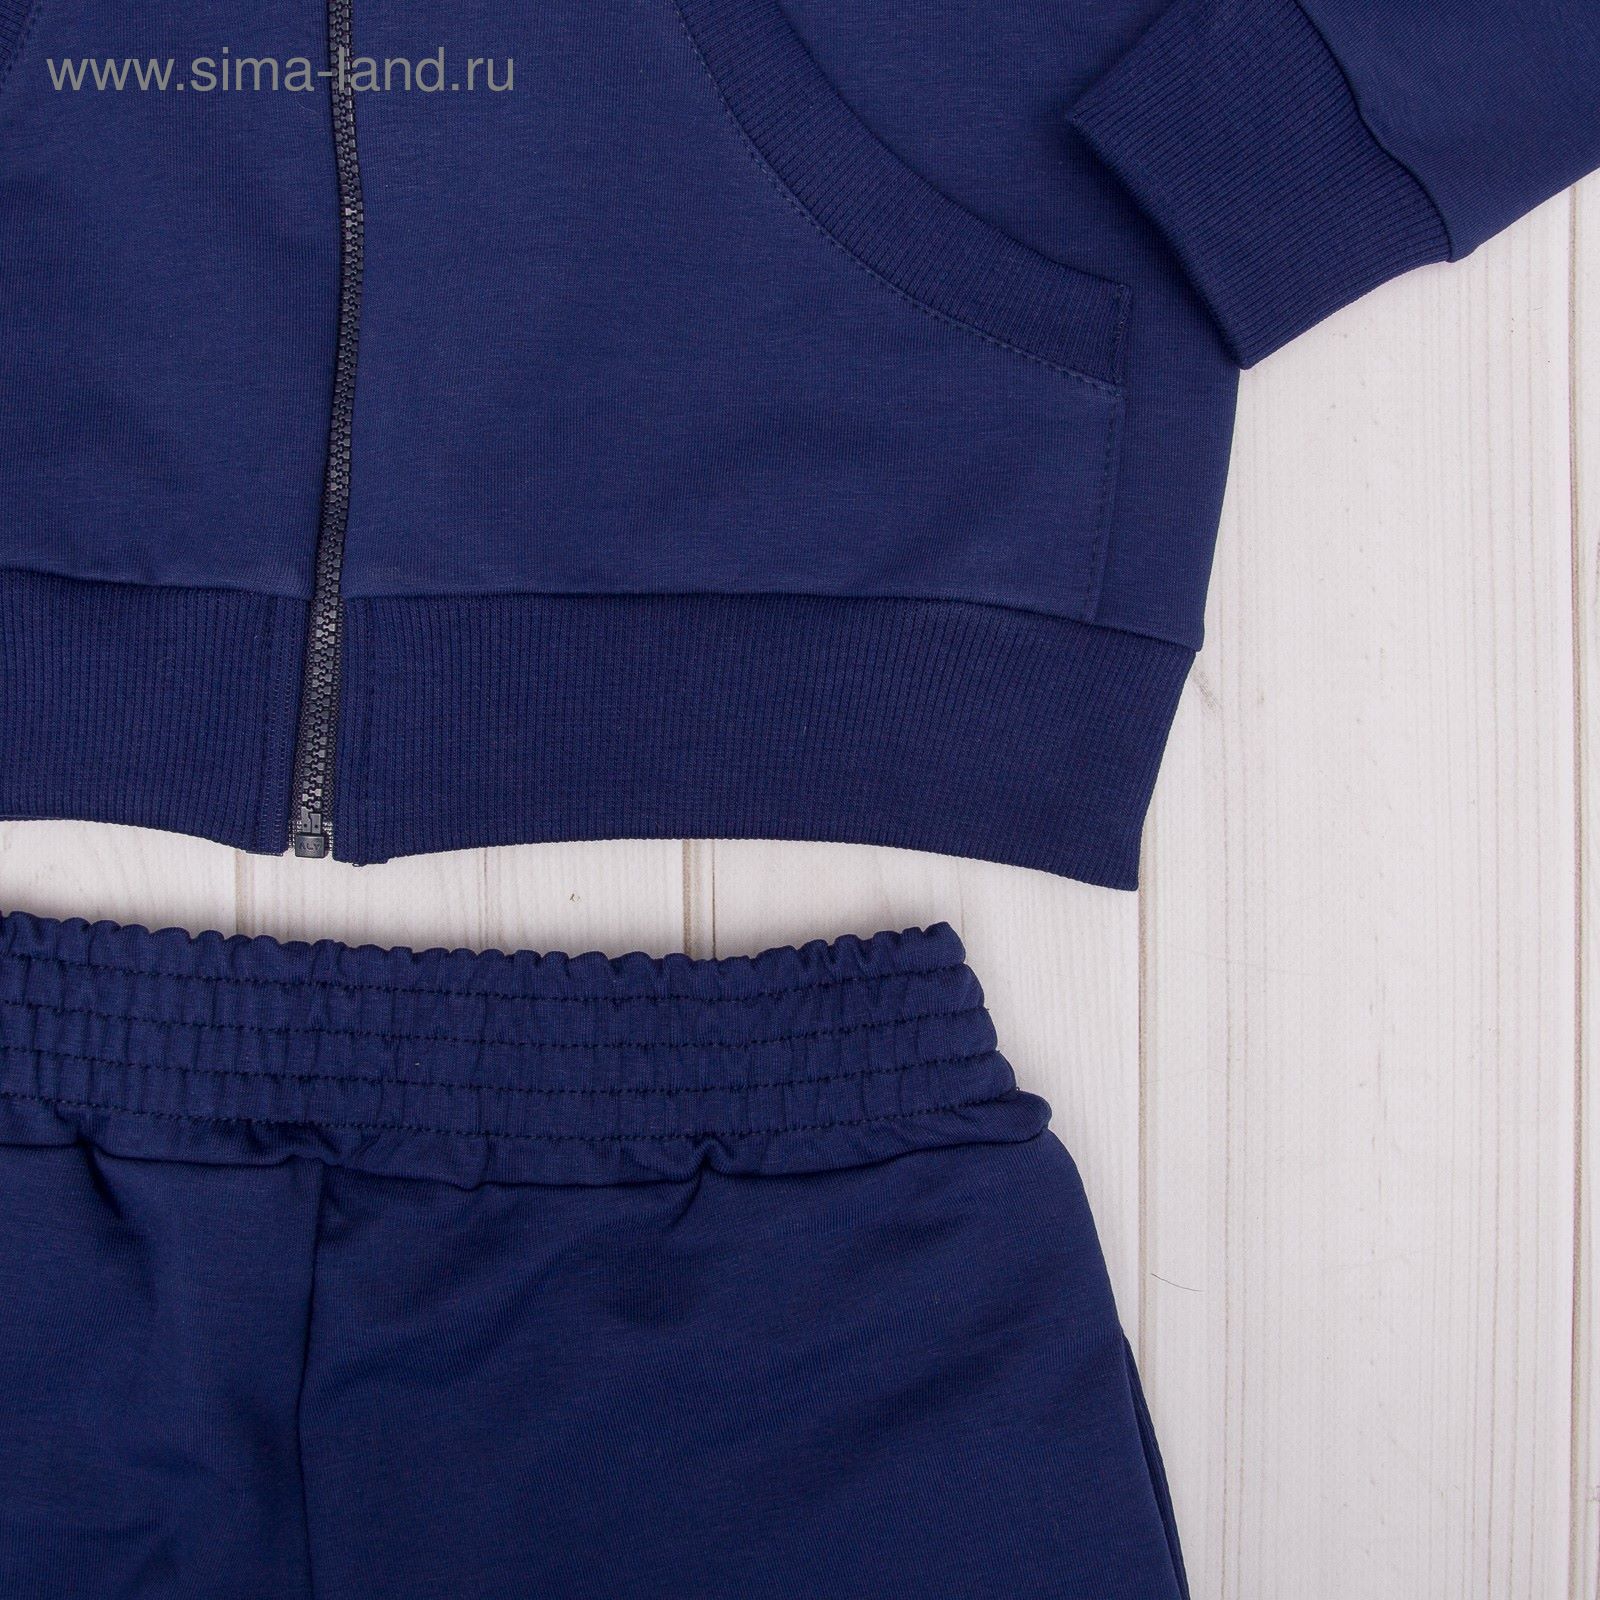 Комплект для девочки (куртка+брюки), рост 146 см, цвет тёмно-синий /цвет фуксия Л692